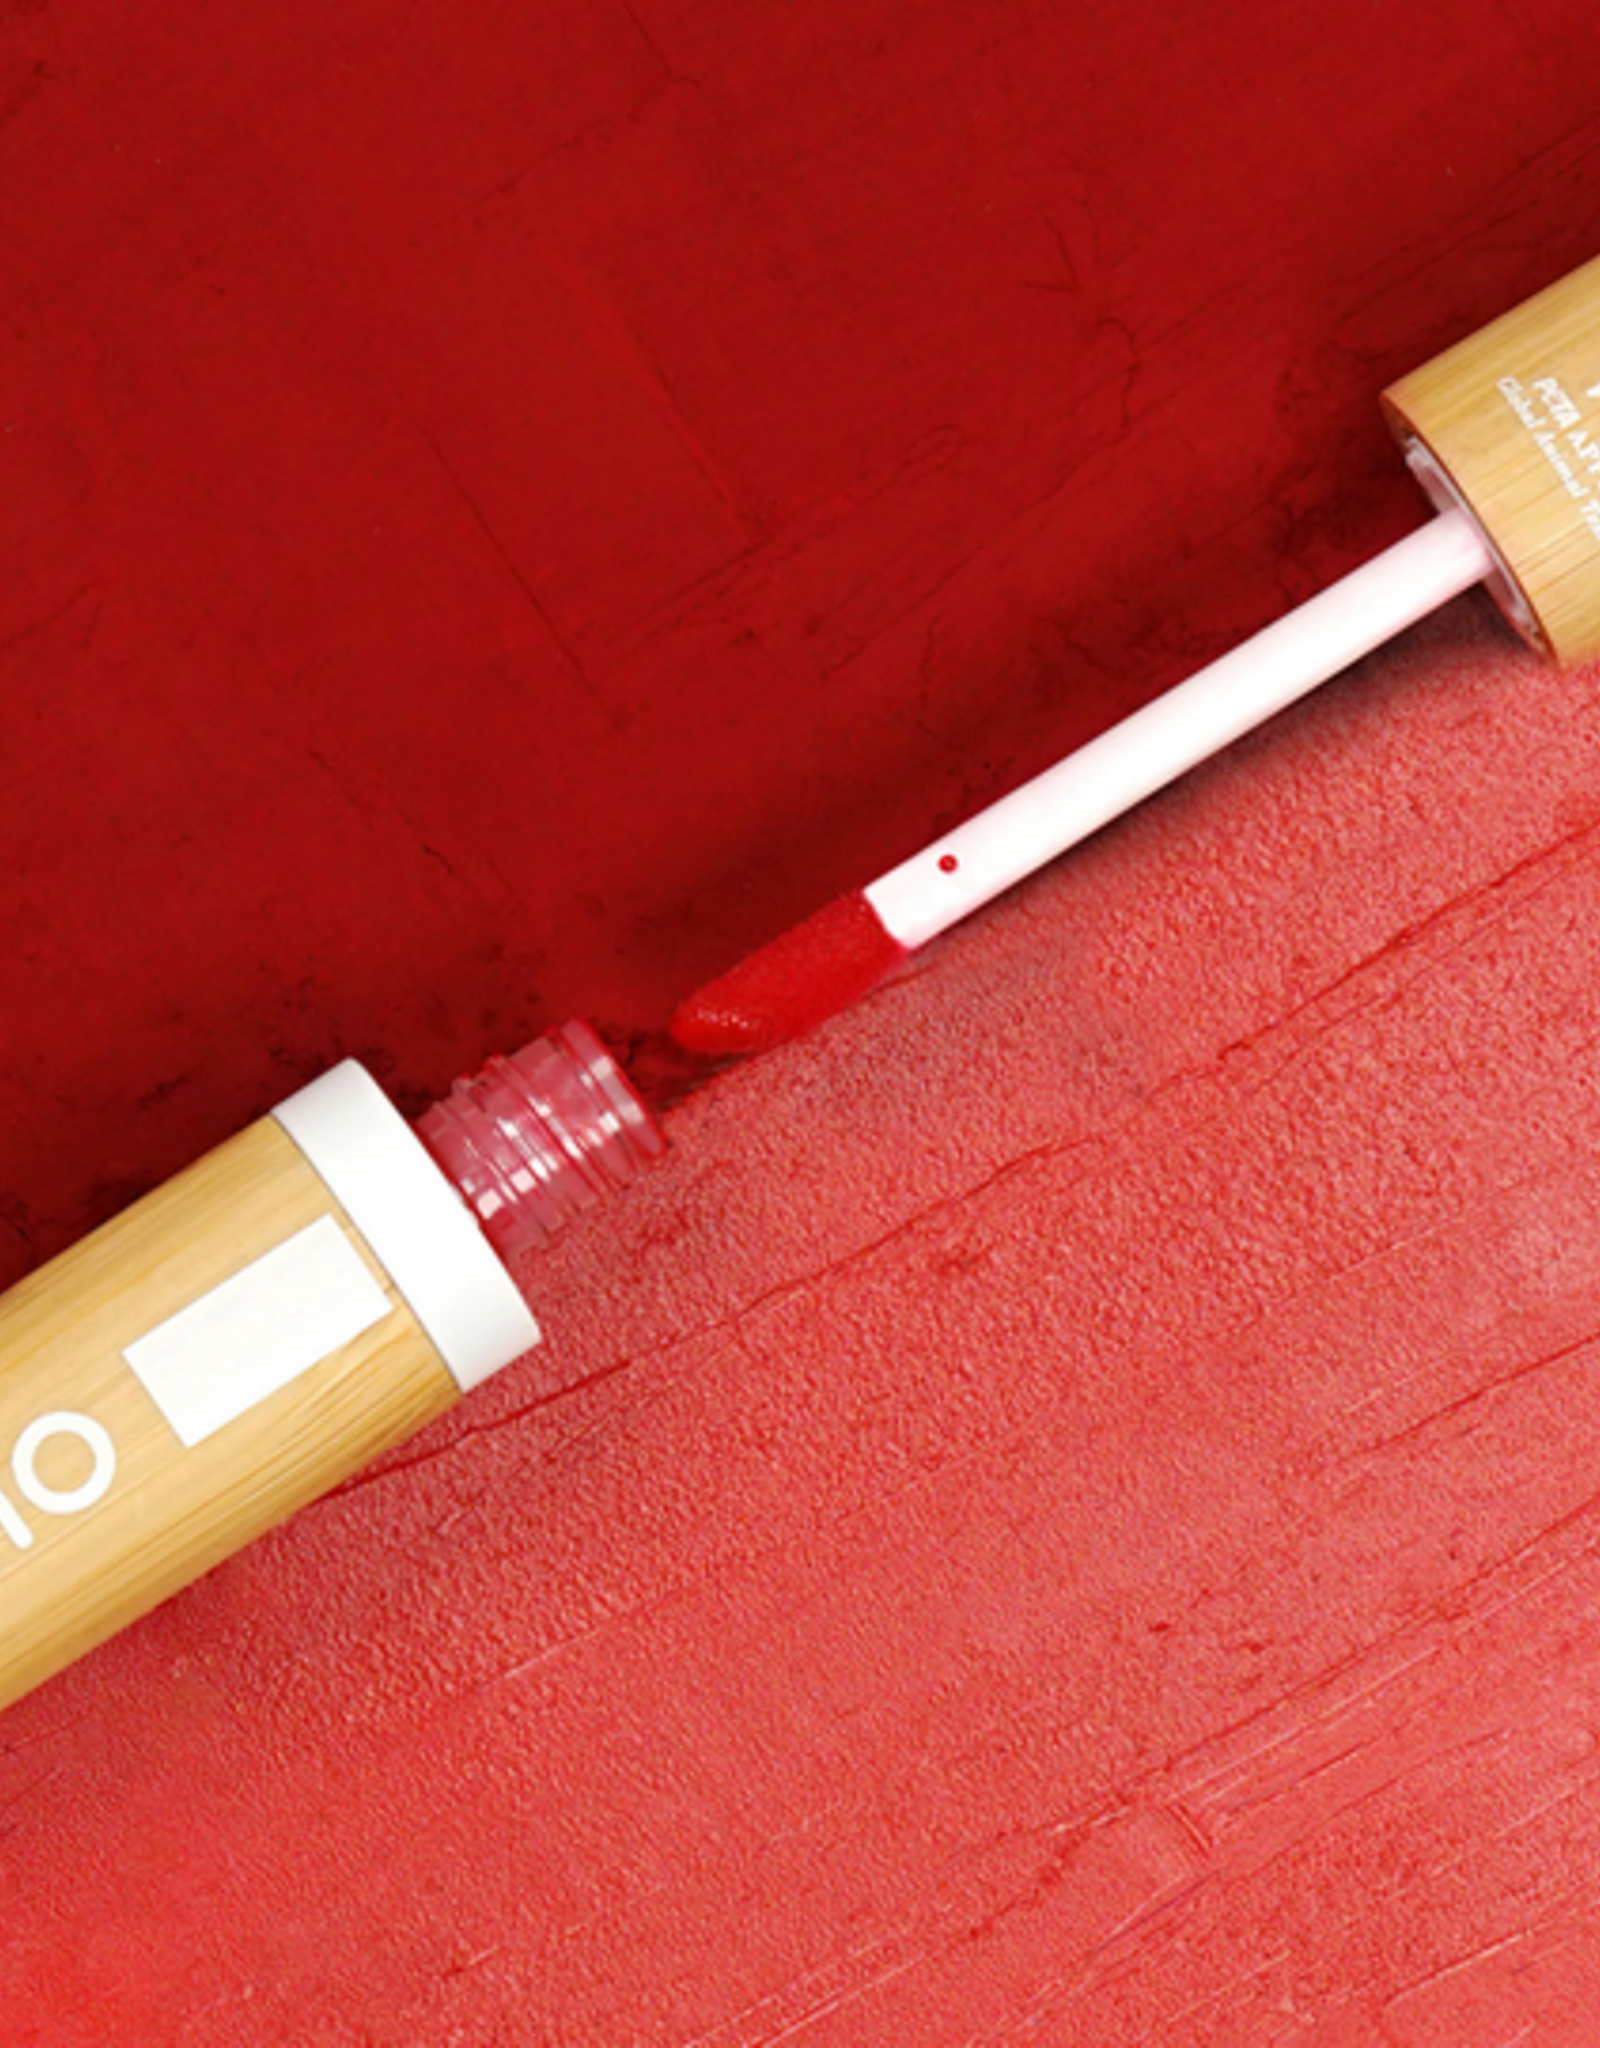 Zao ZAO Bamboe Lip'Ink Daring 450 (Le Rouge) - 3,8ml